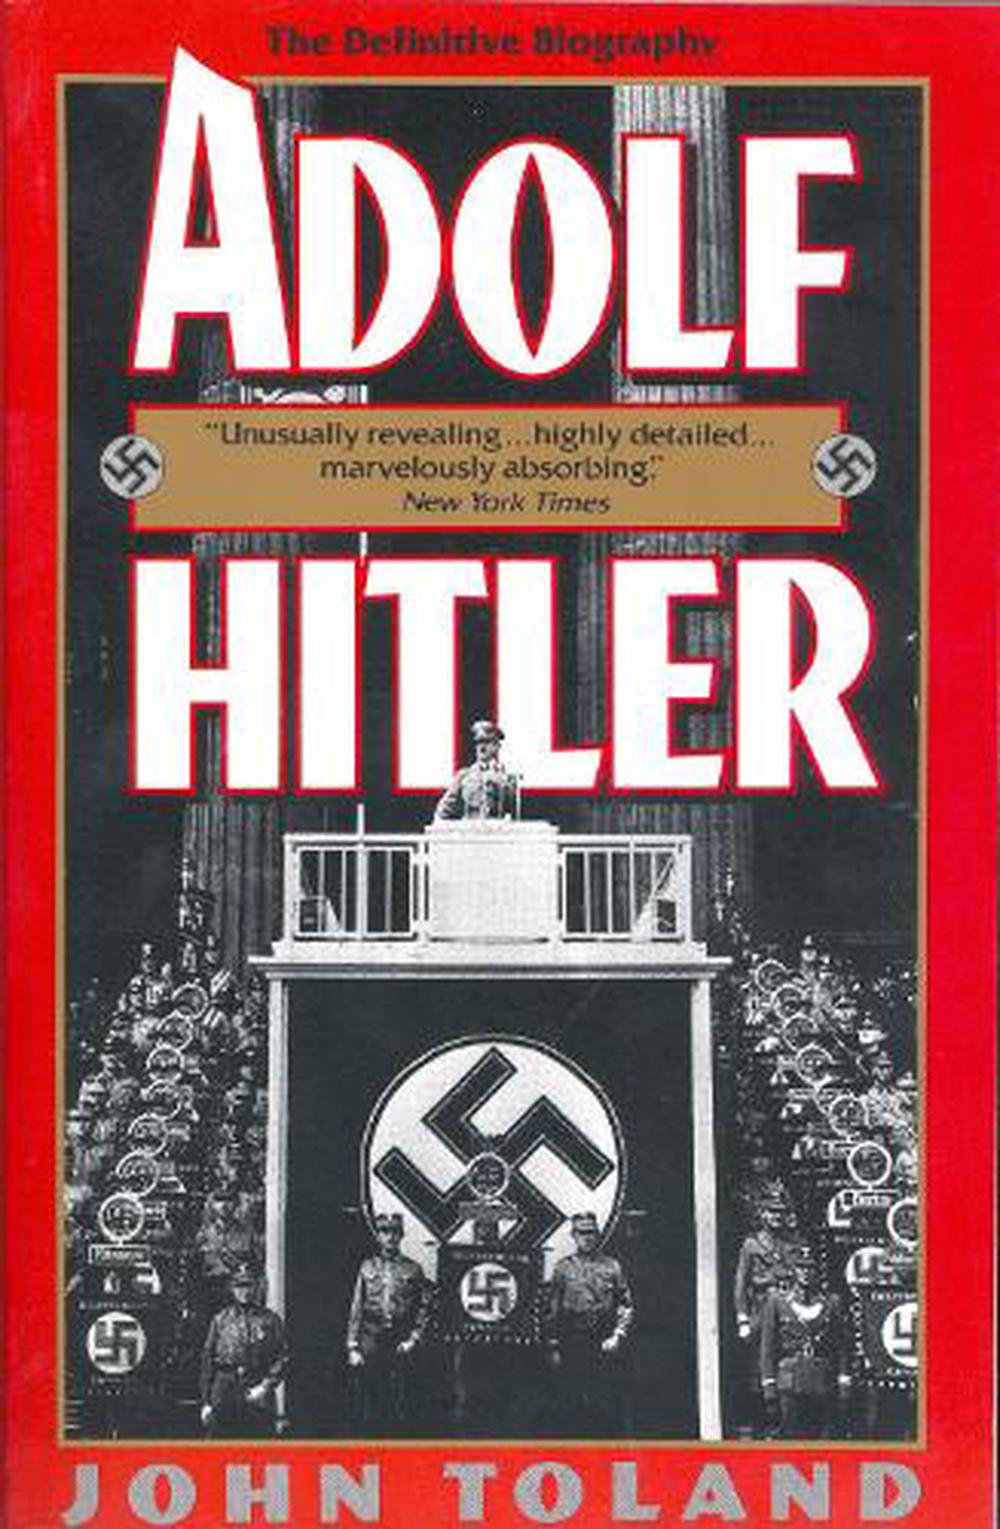 best biography book on hitler